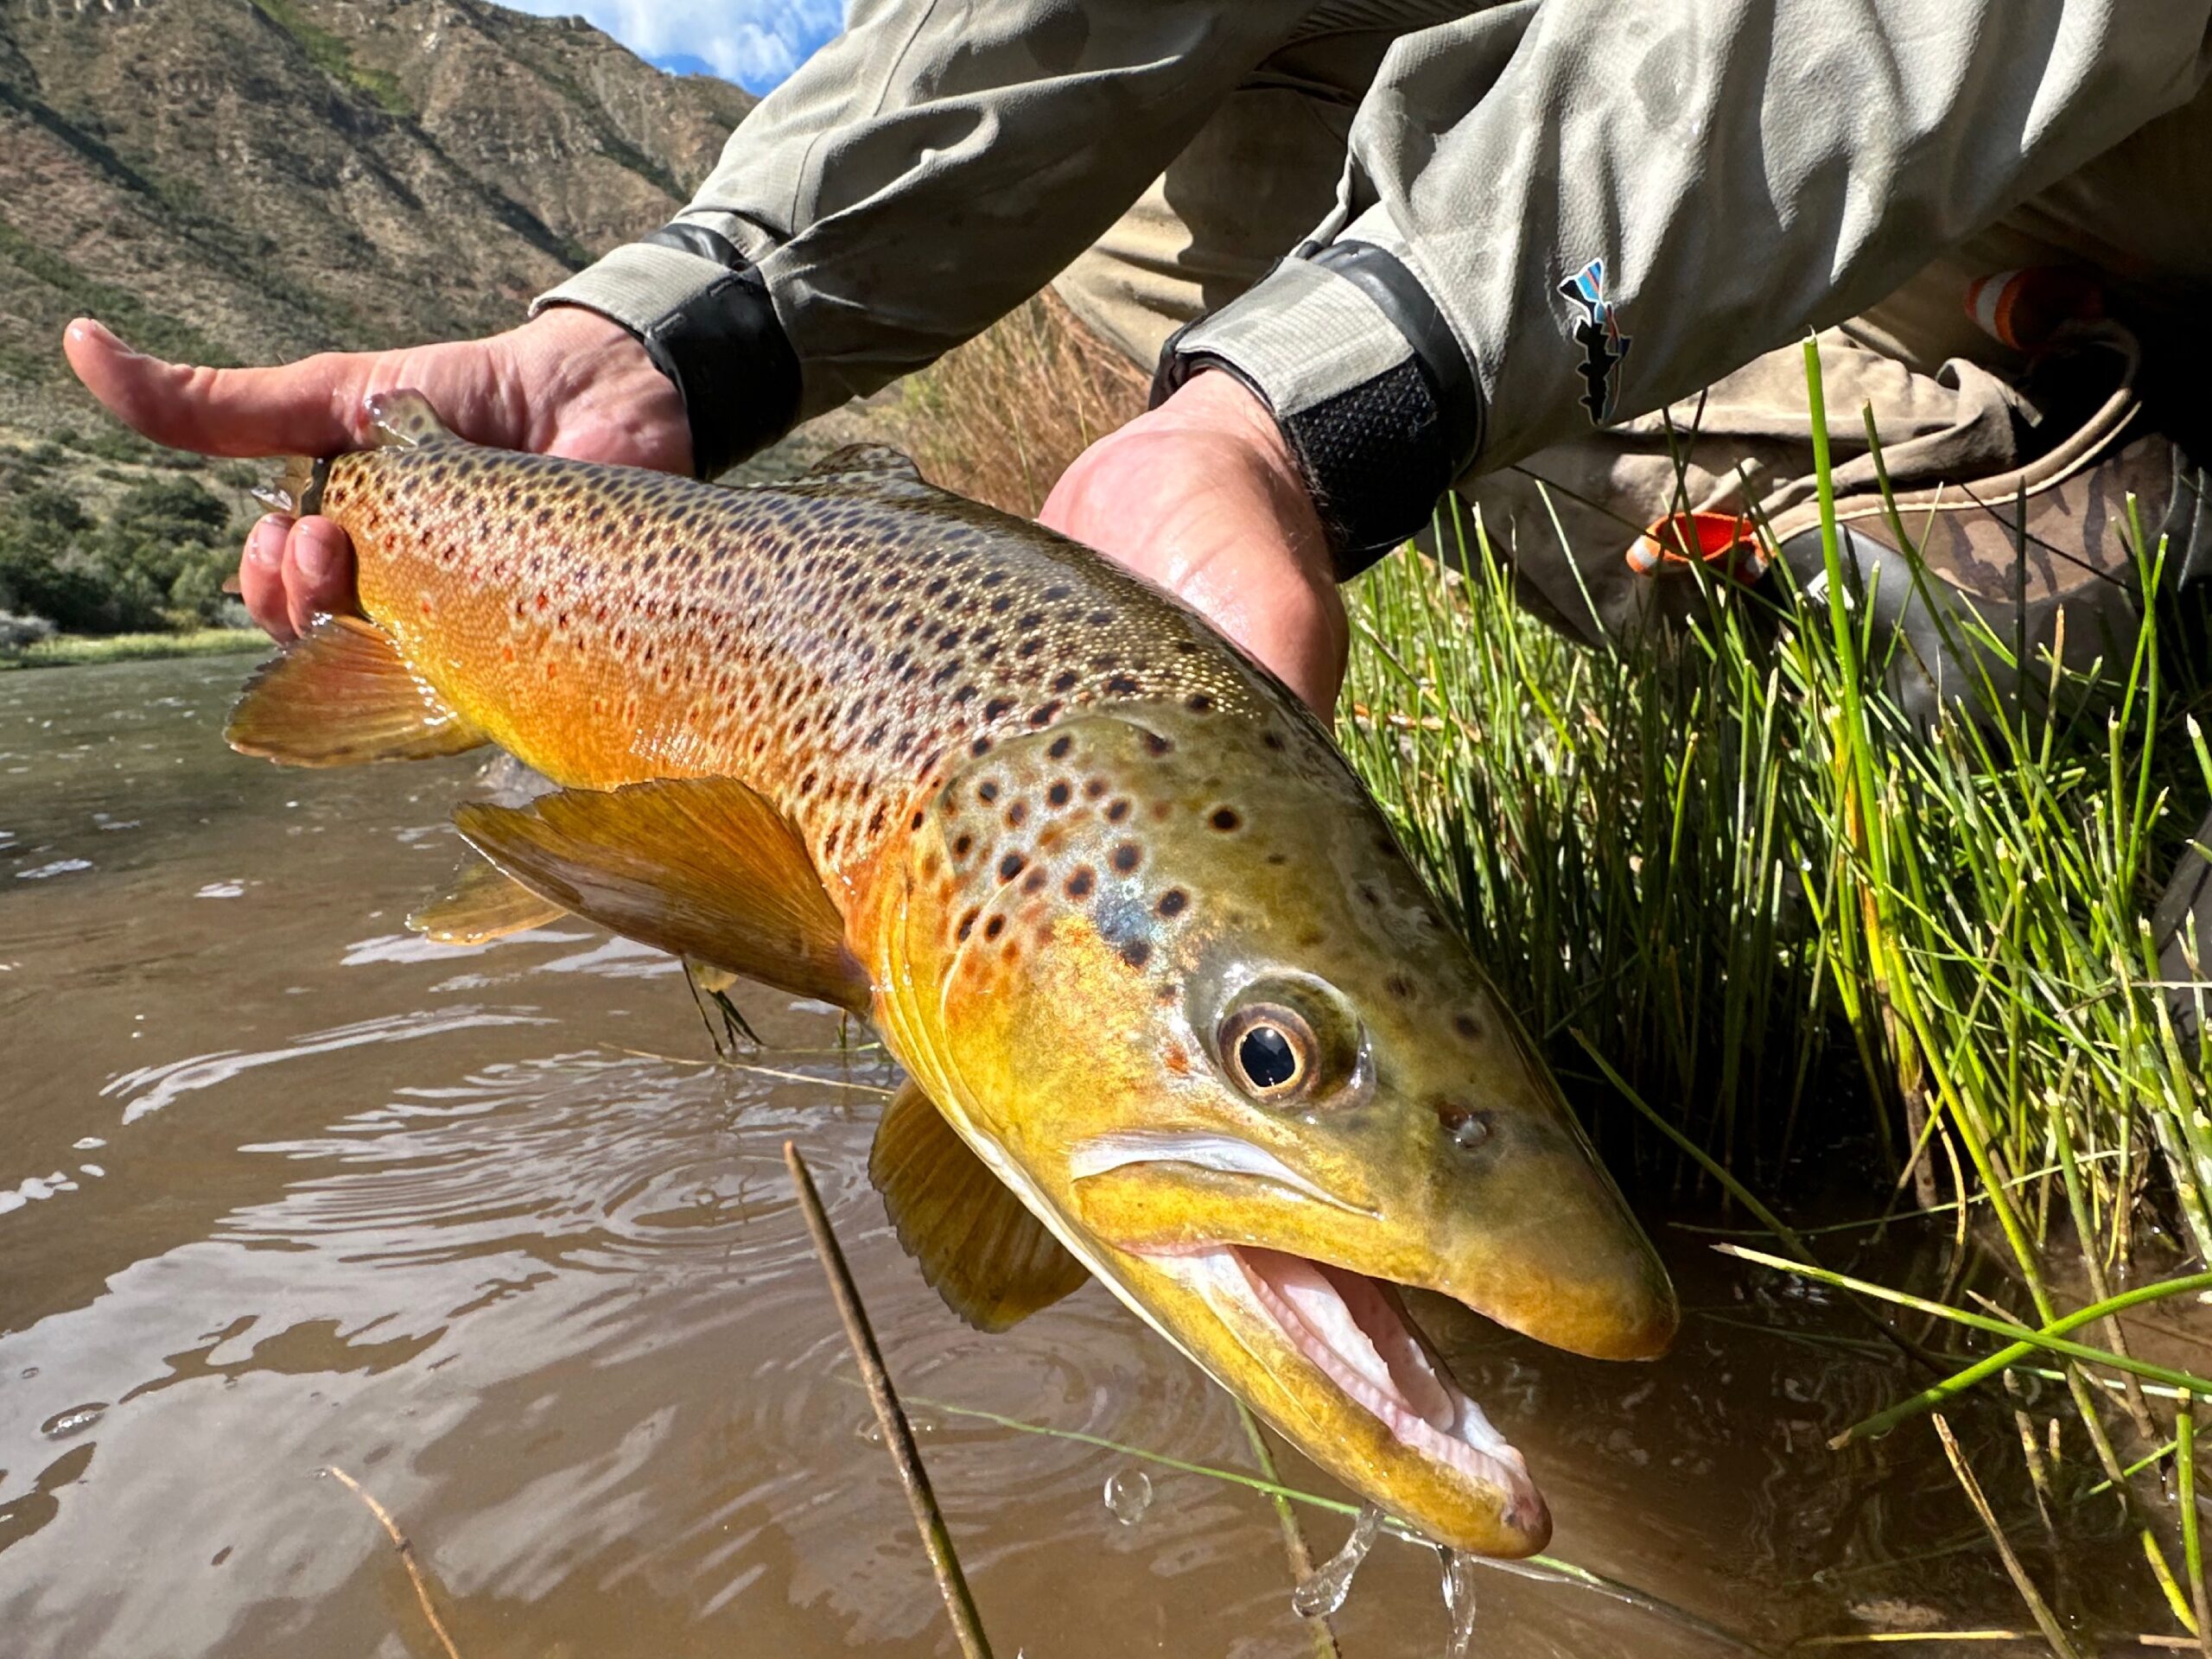 Man caught a Colorado brown trout in river near Aspen Colorado